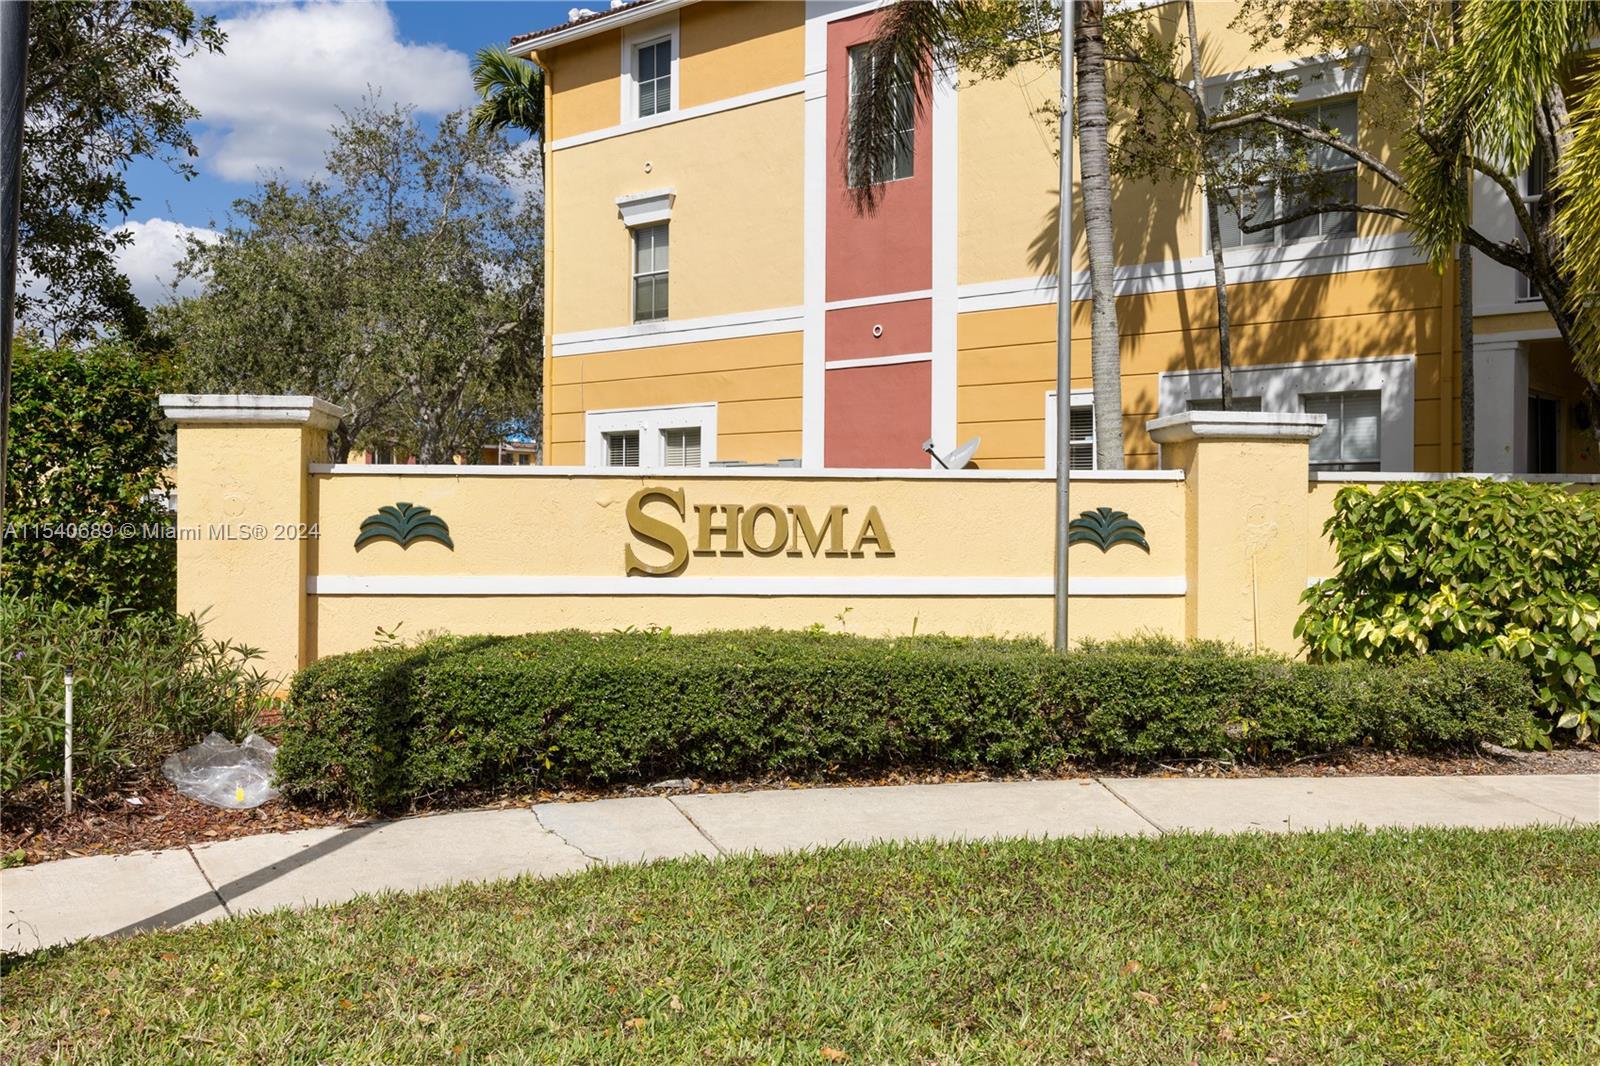 Photo of 2212 Shoma Dr in Royal Palm Beach, FL